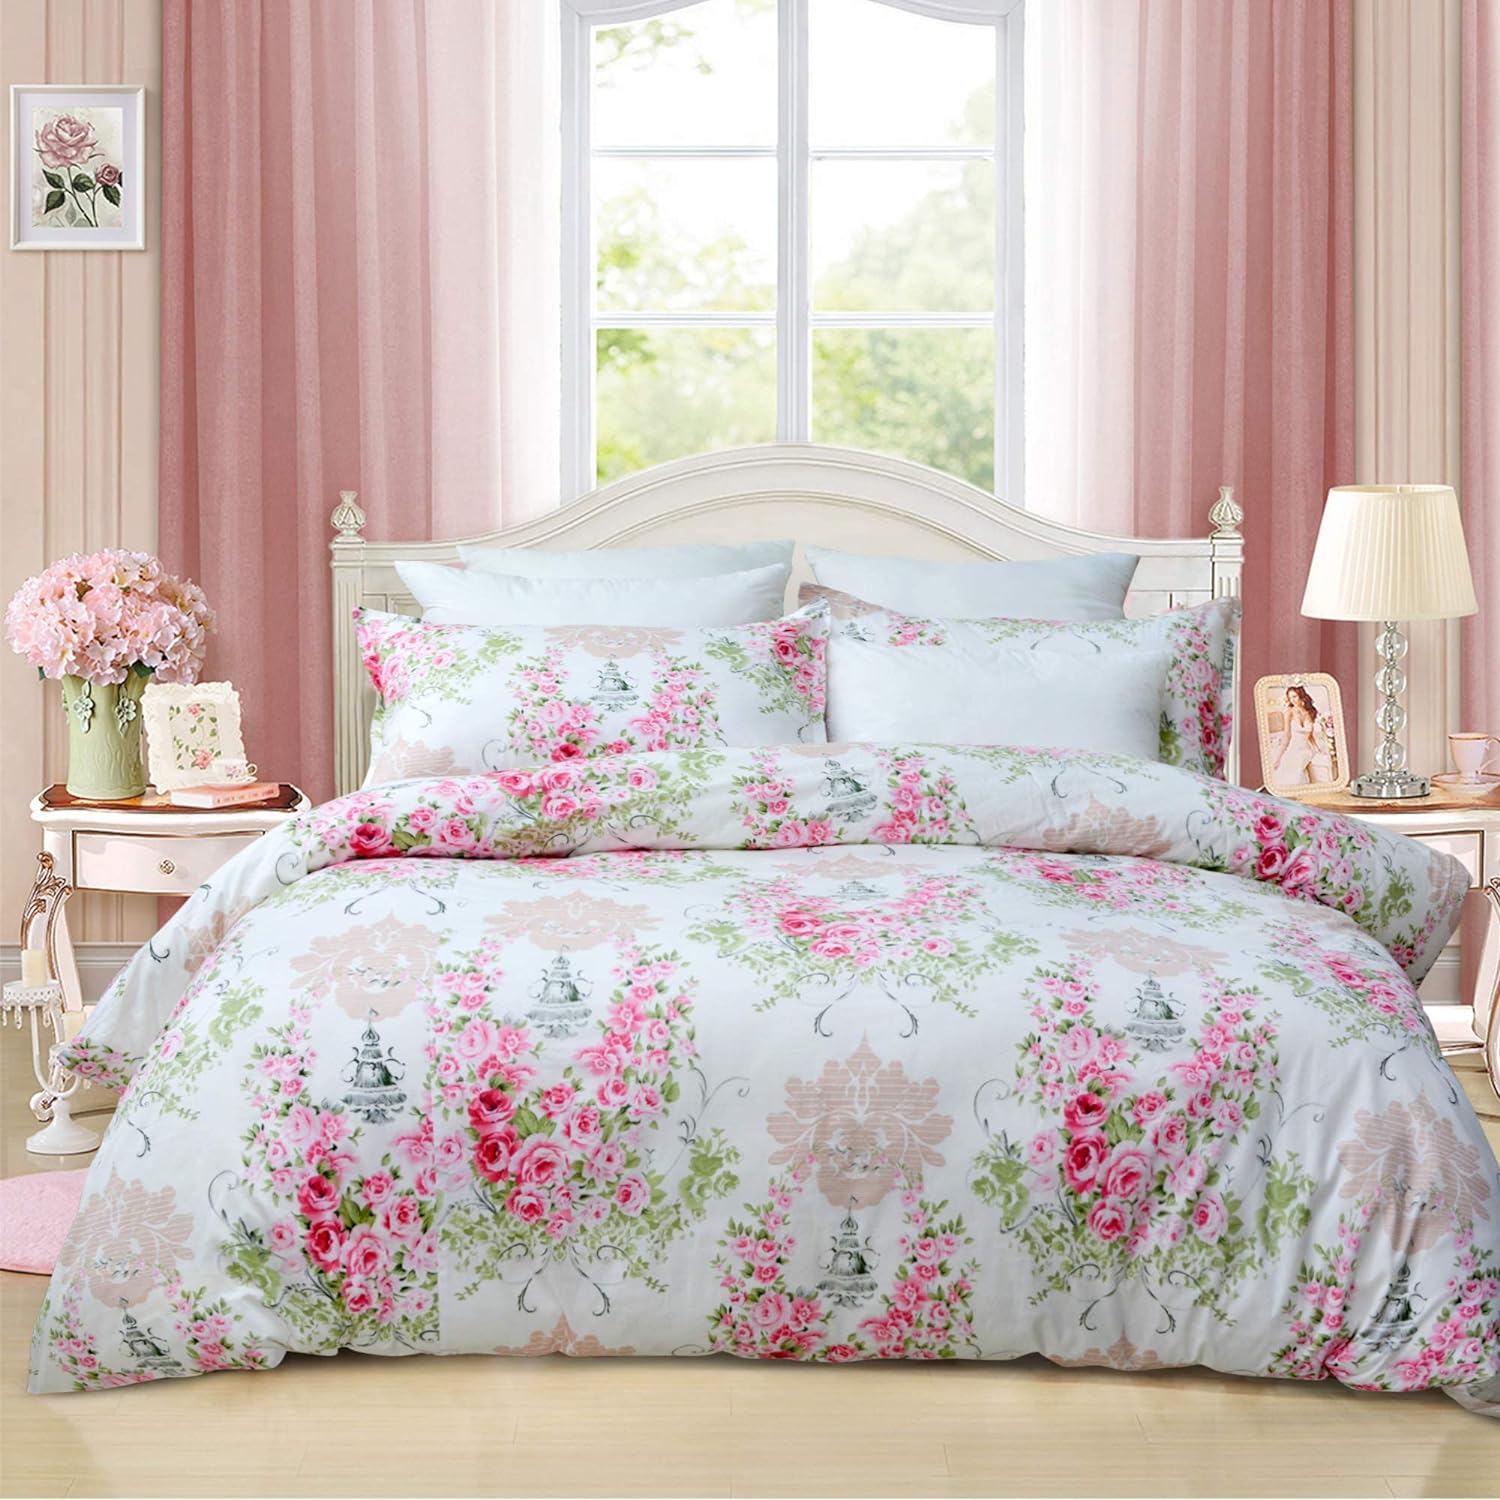 FADFAY 3 Pieces Twin Size Pink Rose Floral Duvet Cover Set 100% Cotton Girls Women Bedding Sets with Hidden Zipper Closure (1 Duvet Cover, 2 Pillowcases)